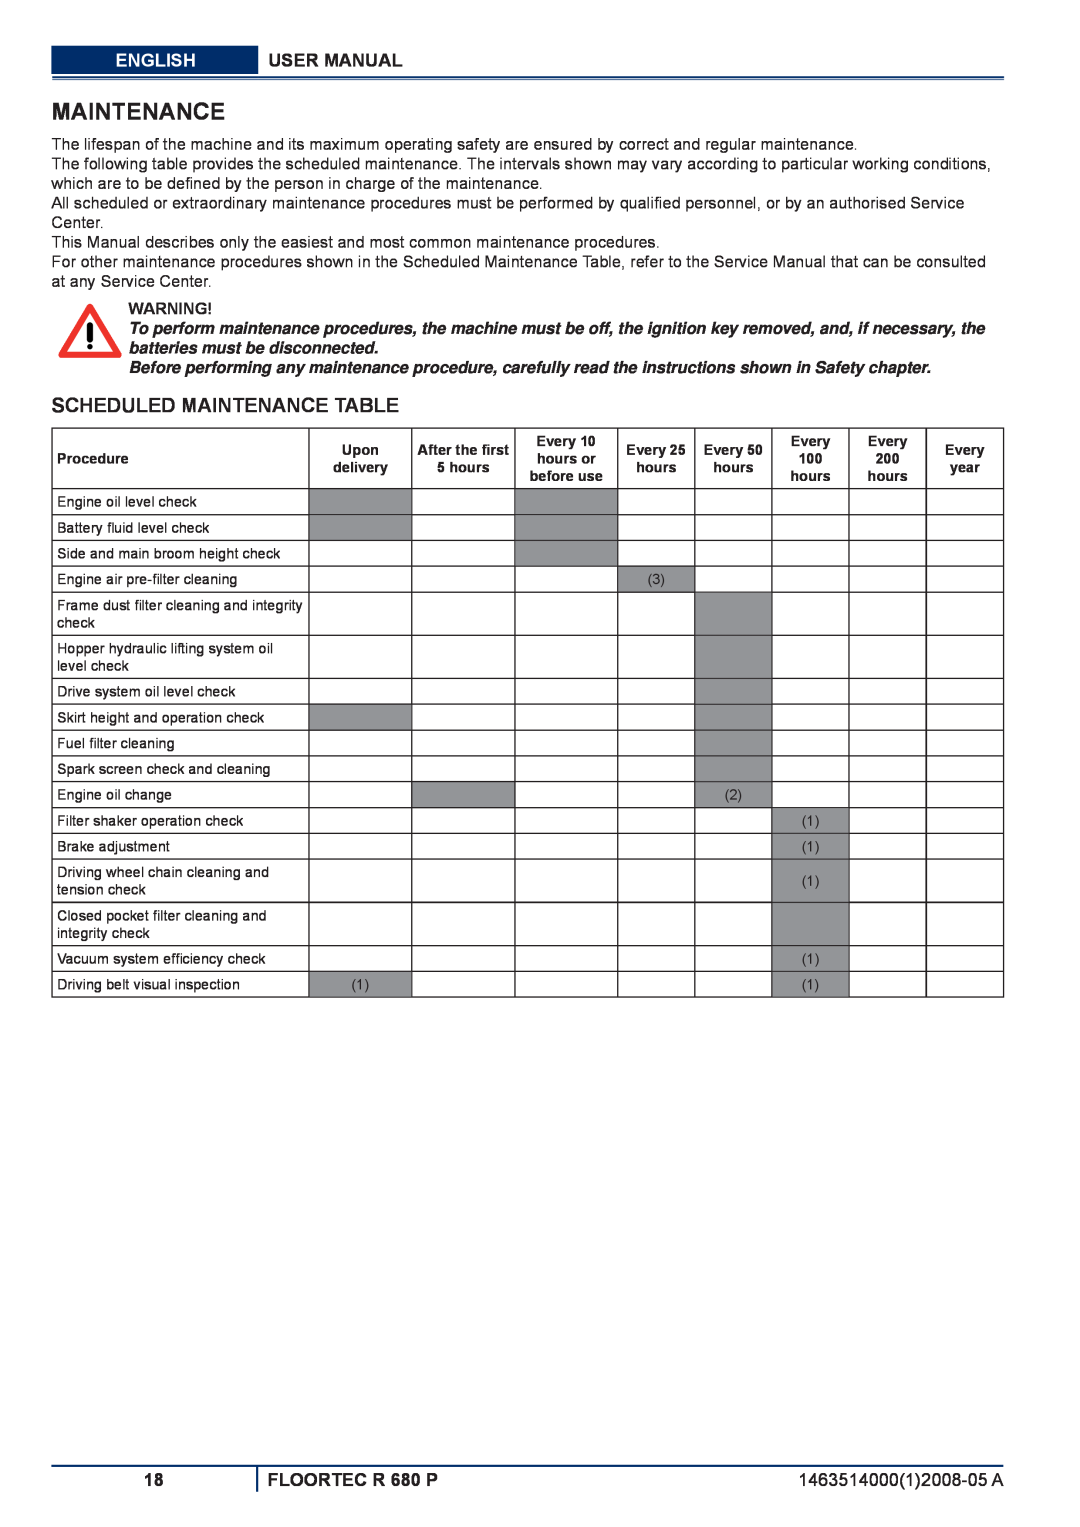 Nilfisk-ALTO manuel dutilisation Scheduled Maintenance Table, English, FLOORTEC R 680 P 